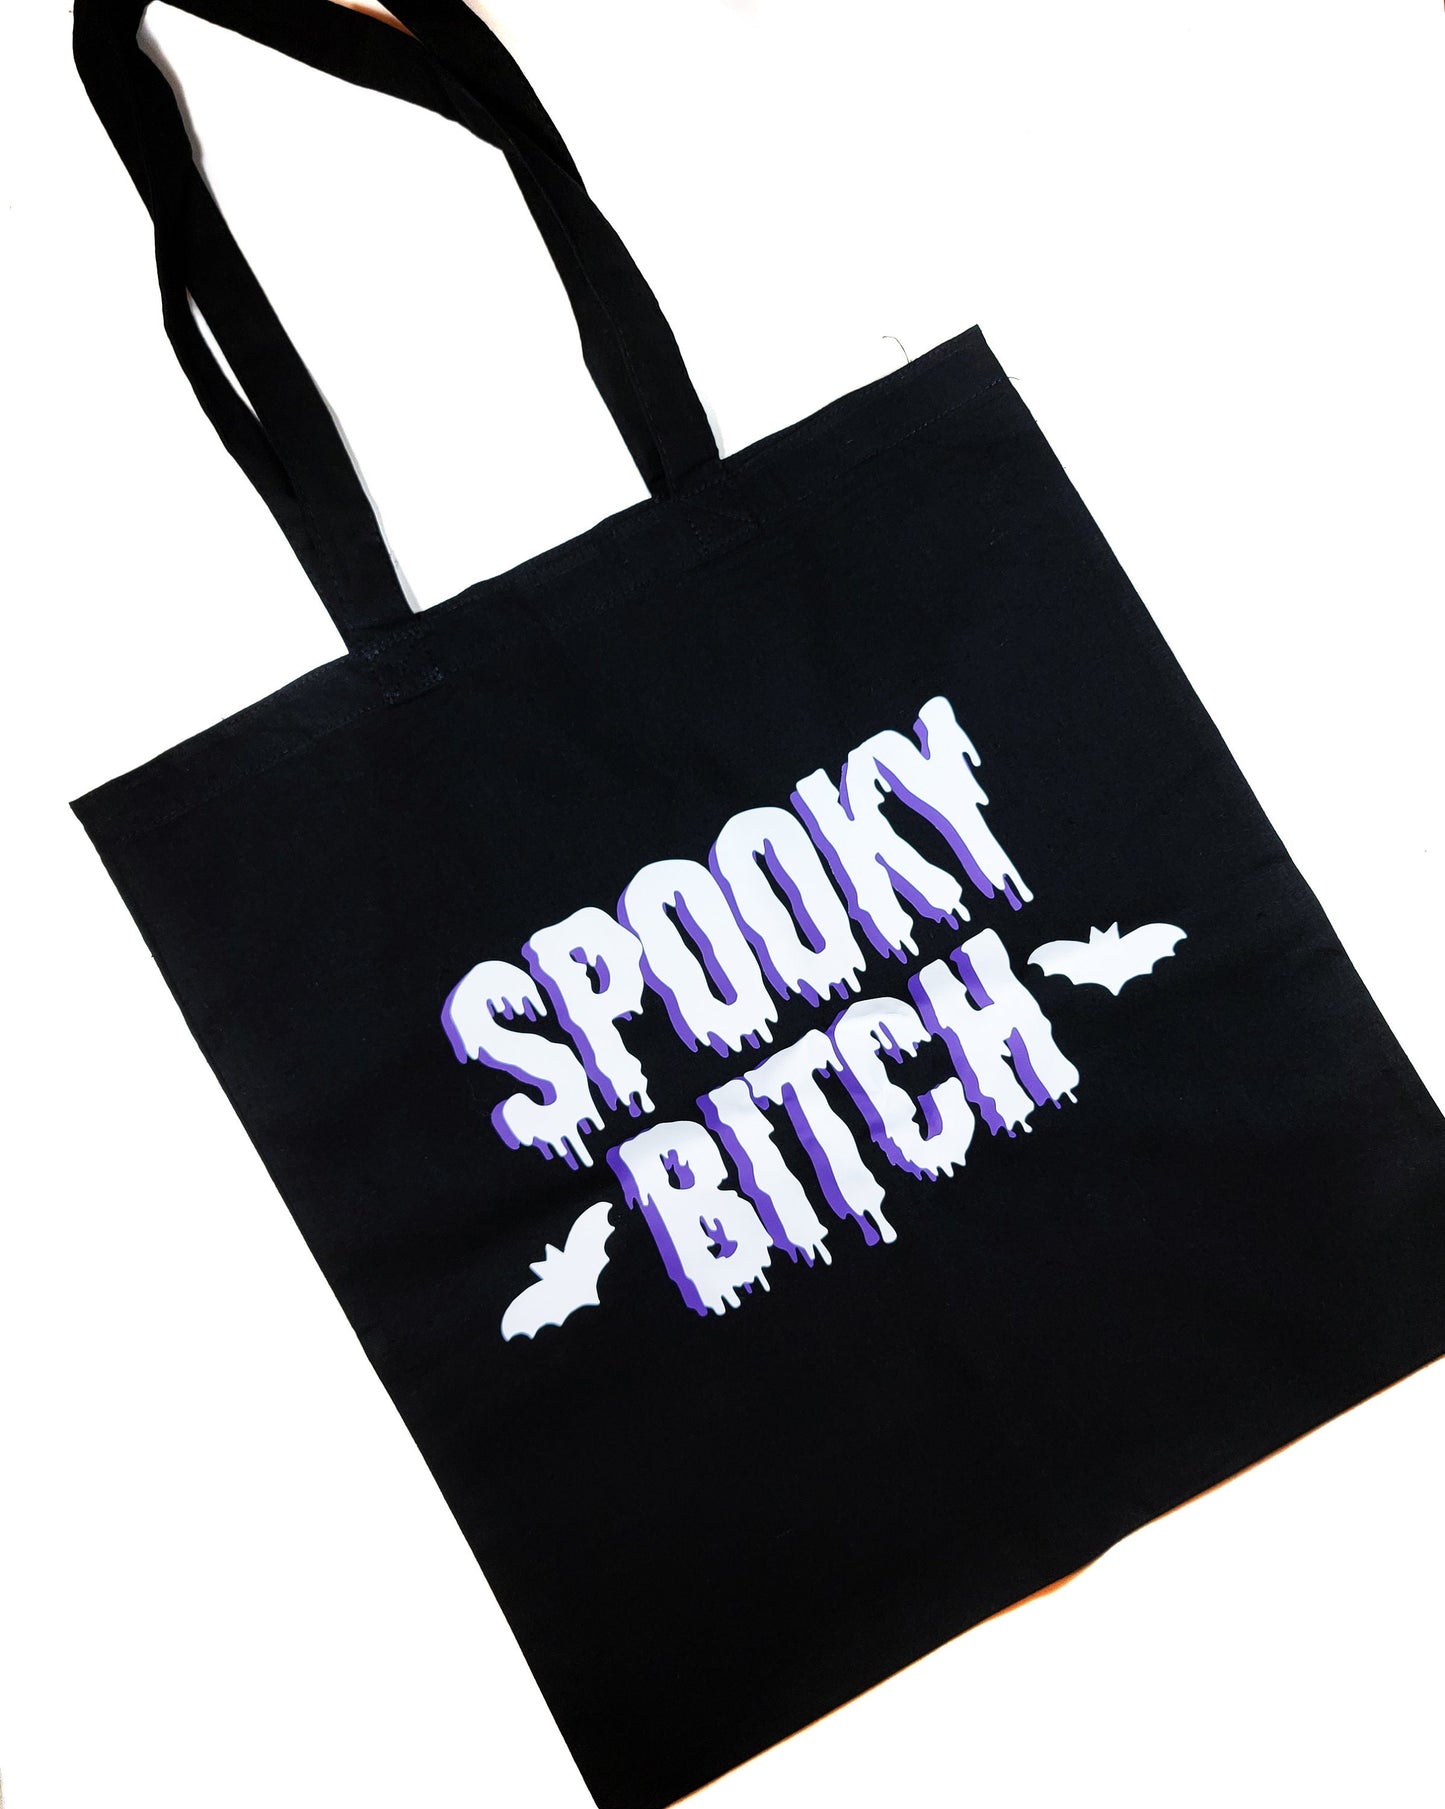 Spooky Bitch Tote Bag Black Cotton Reusable Shopping Bag 15"x16" Horror Goth